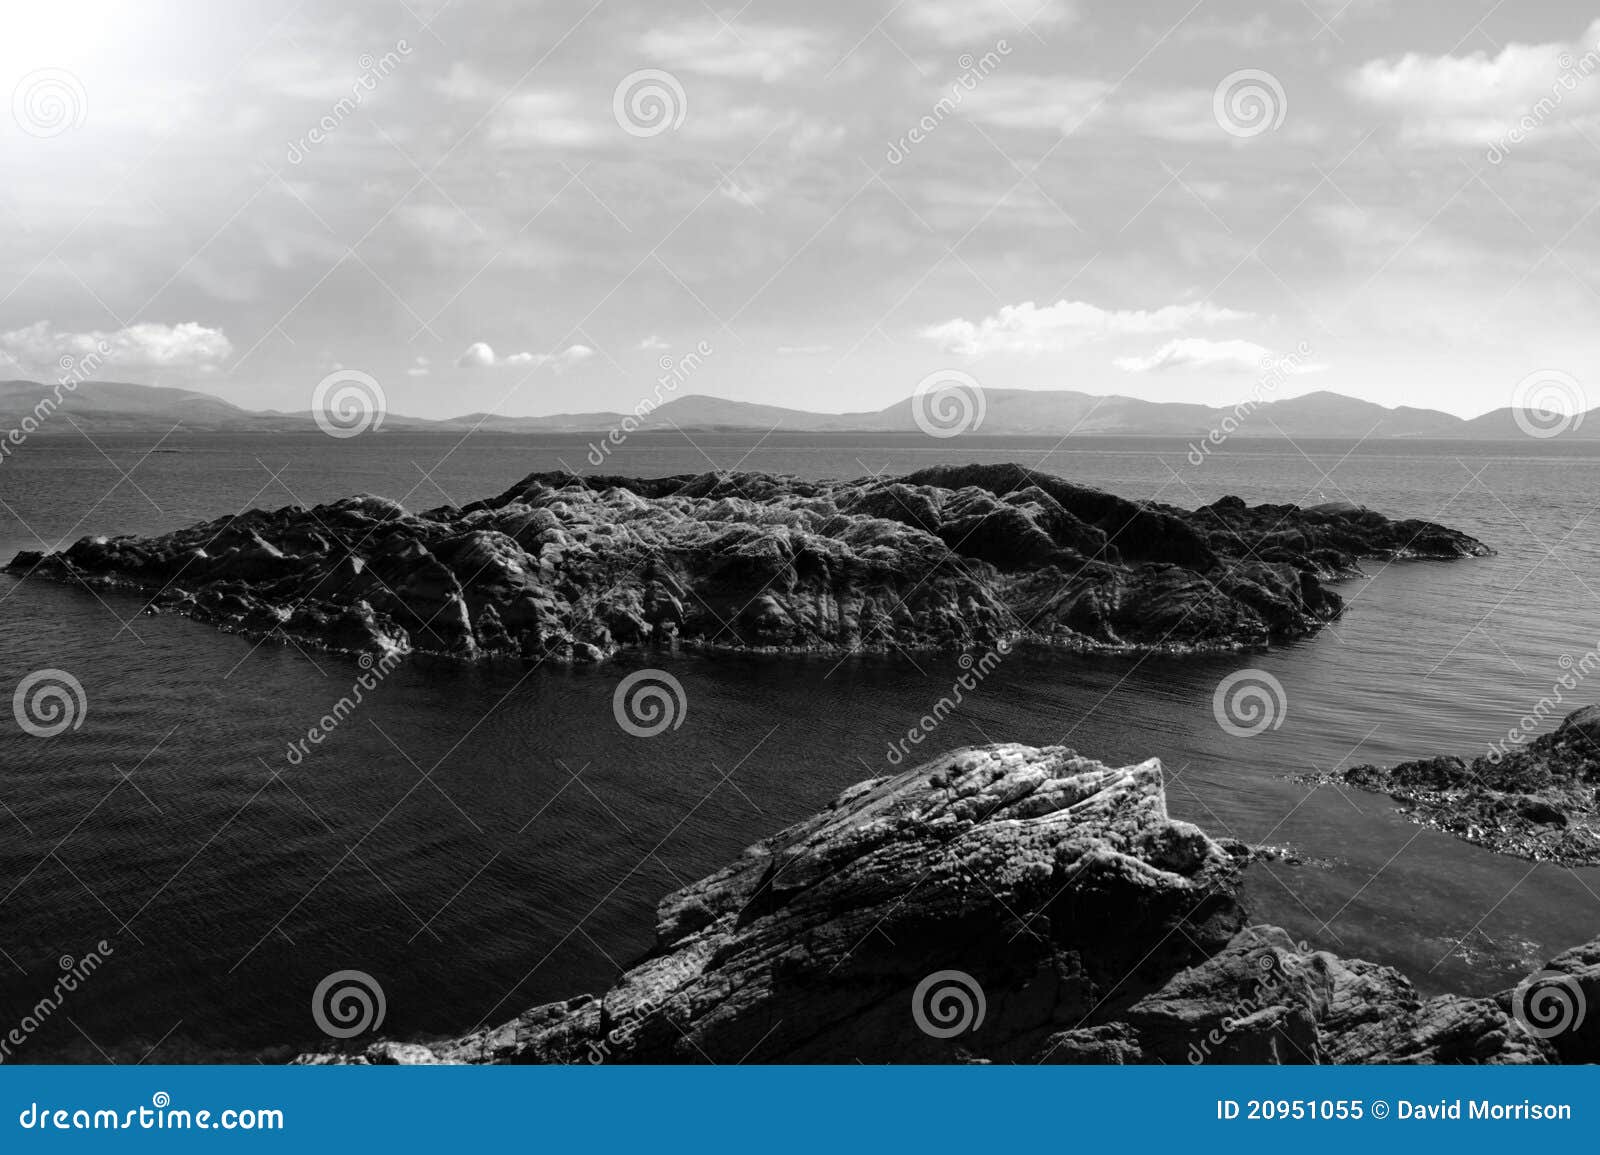 Isolated rocky islands stock image. Image of ireland - 20951055